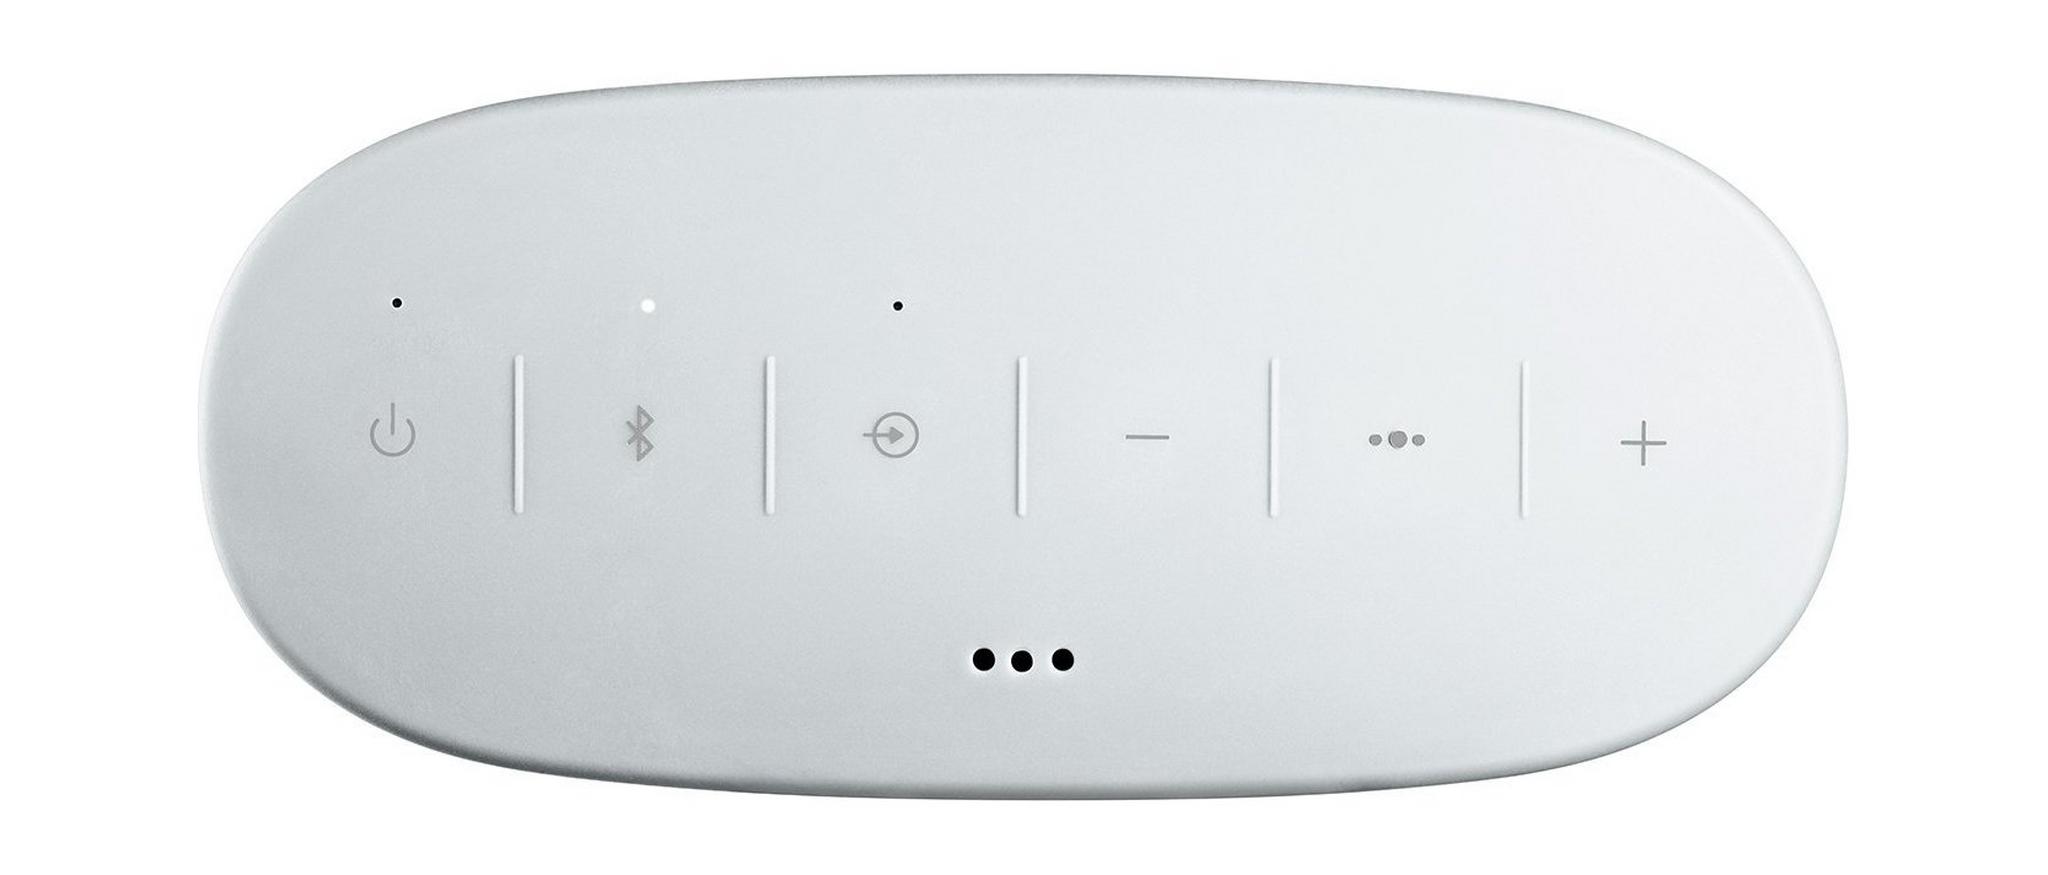 Bose SoundLink Color II Bluetooth Speaker - Polar White